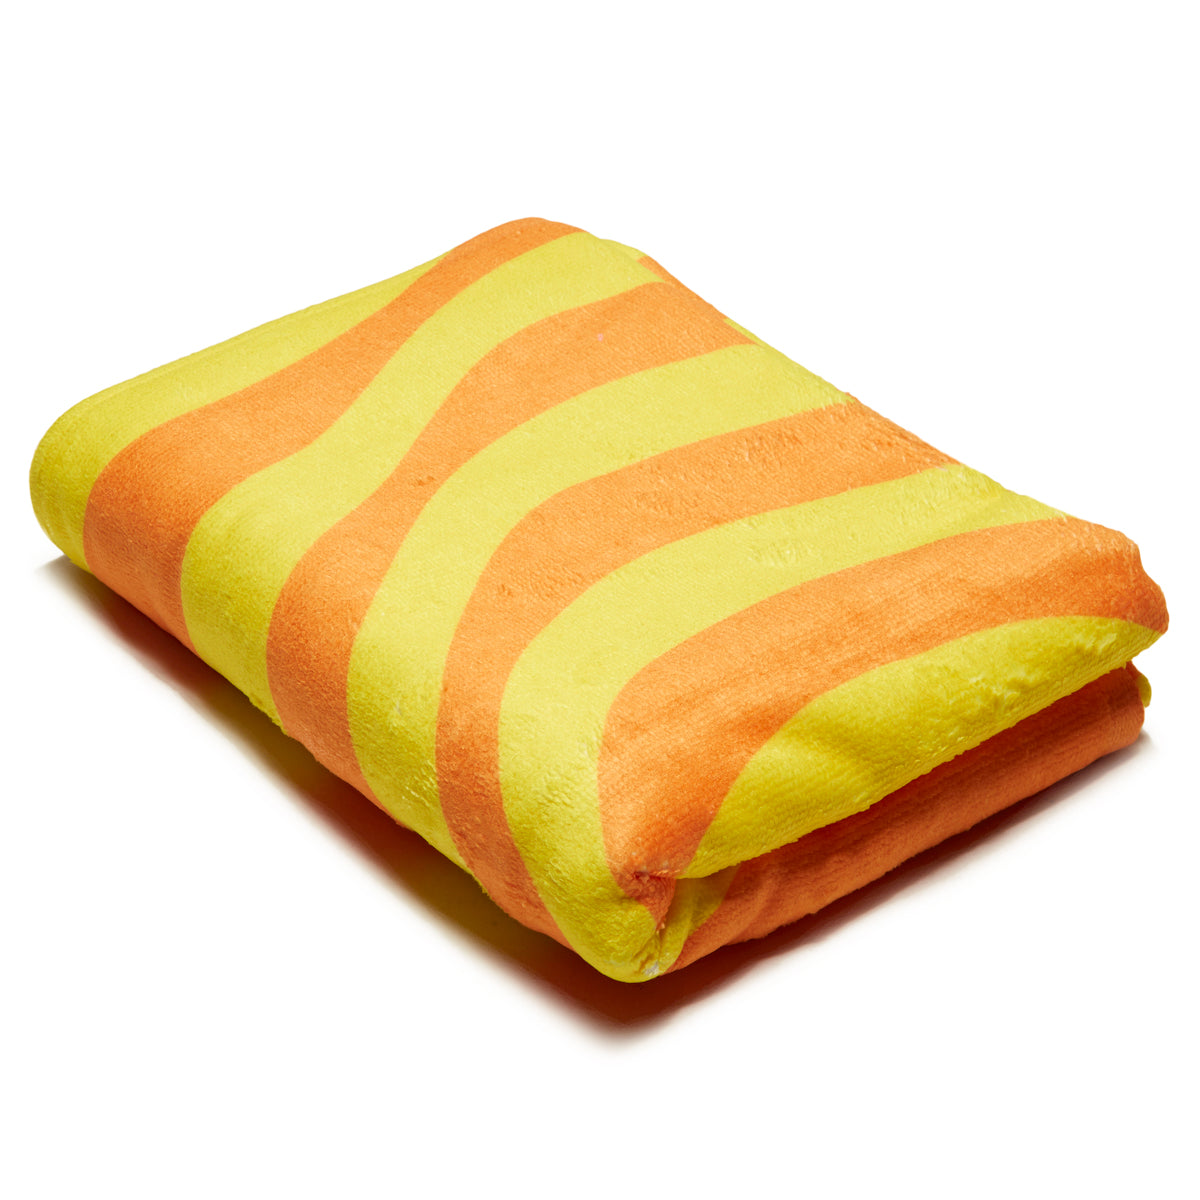 Spitfire Bighead Towel - Orange/Yellow Swirl image 3